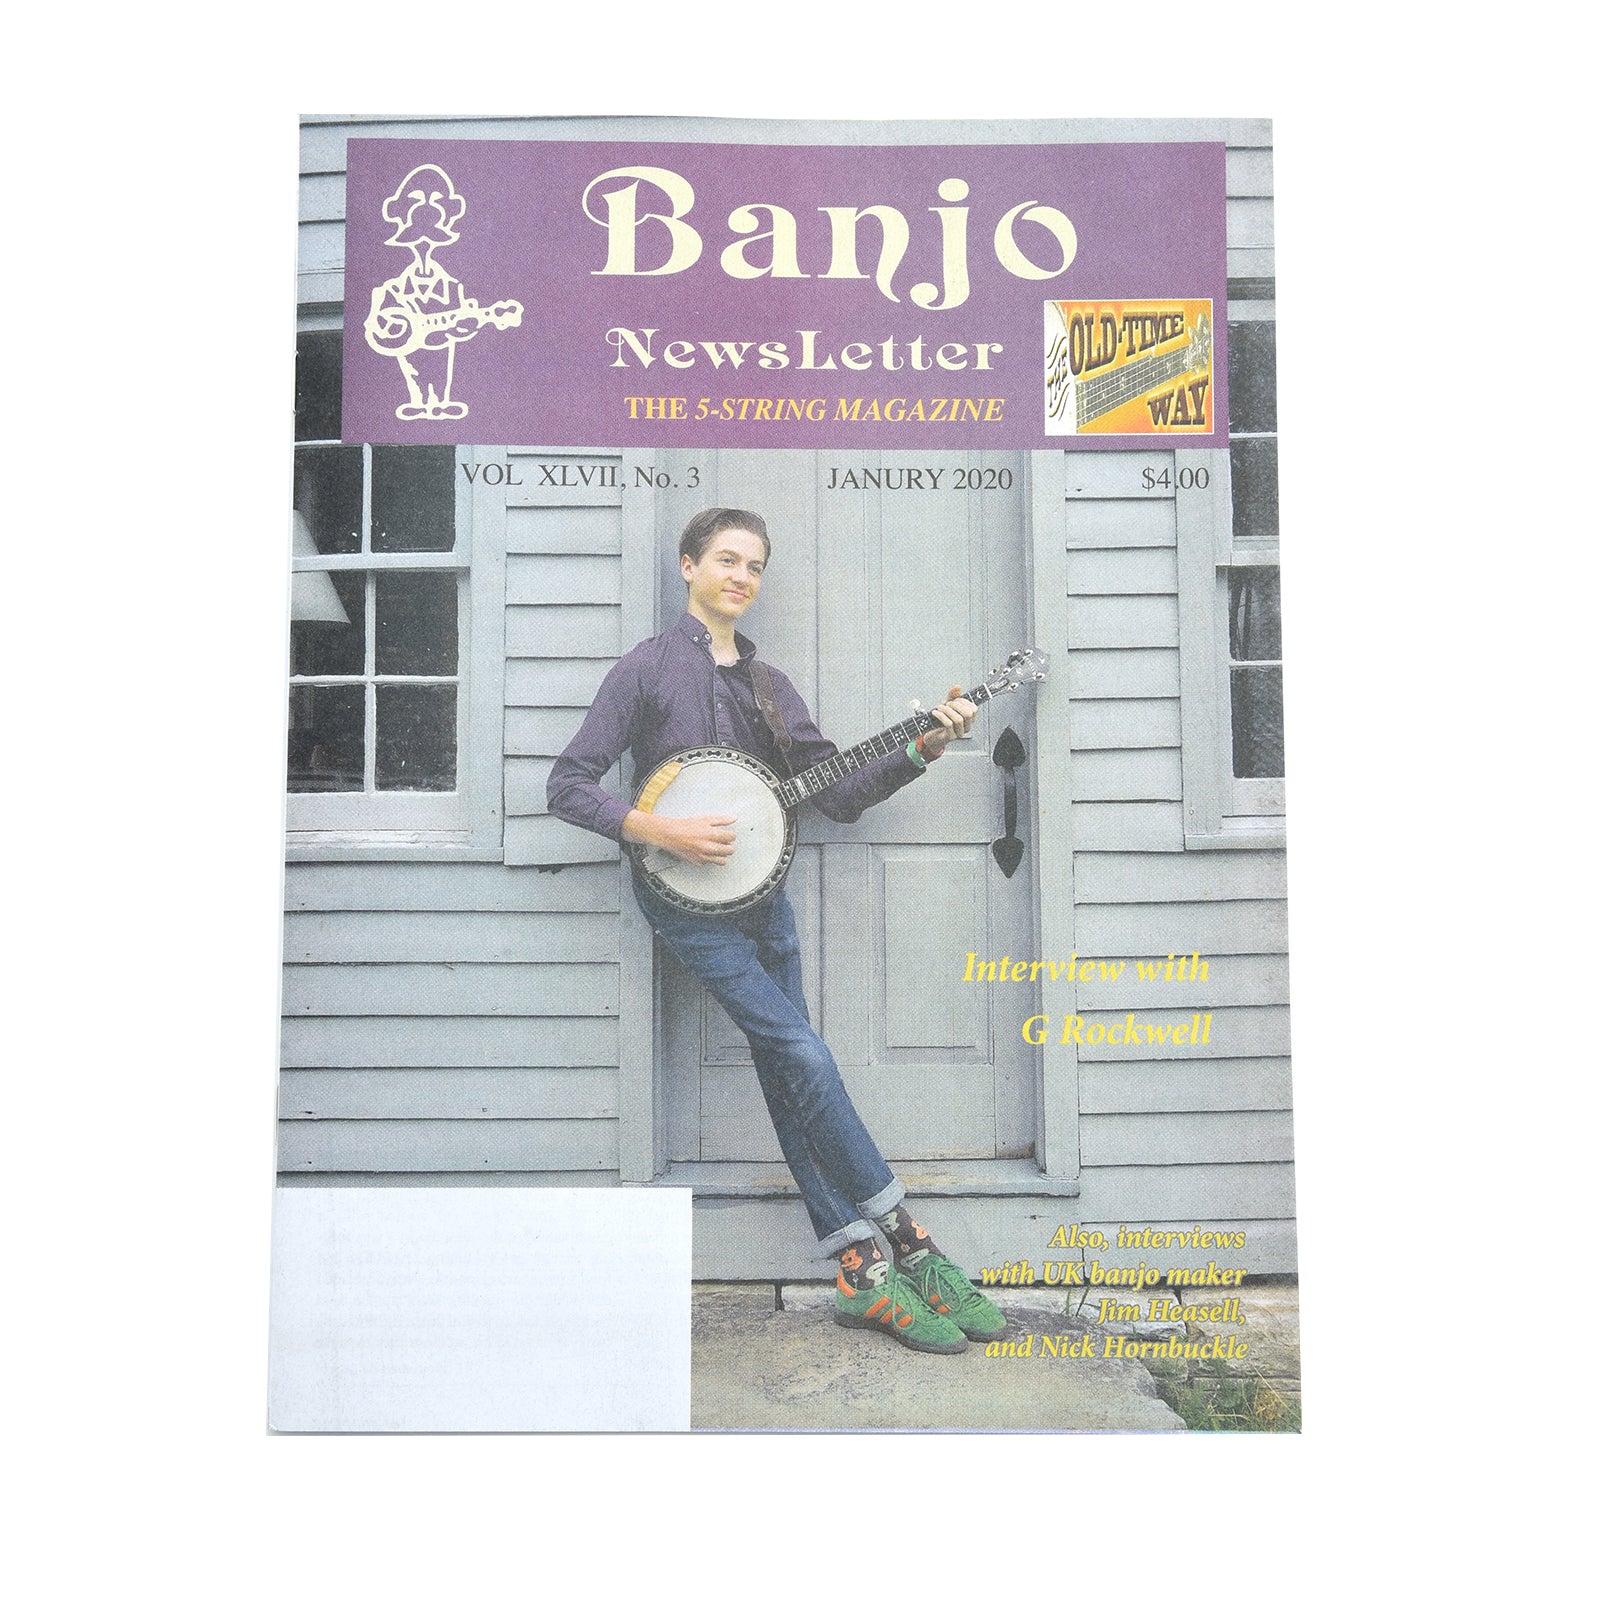 Image 1 of Banjo Newsletter - January 2020, Vol. XLVII, No. 3 - SKU# BN-202001 : Product Type Media : Elderly Instruments